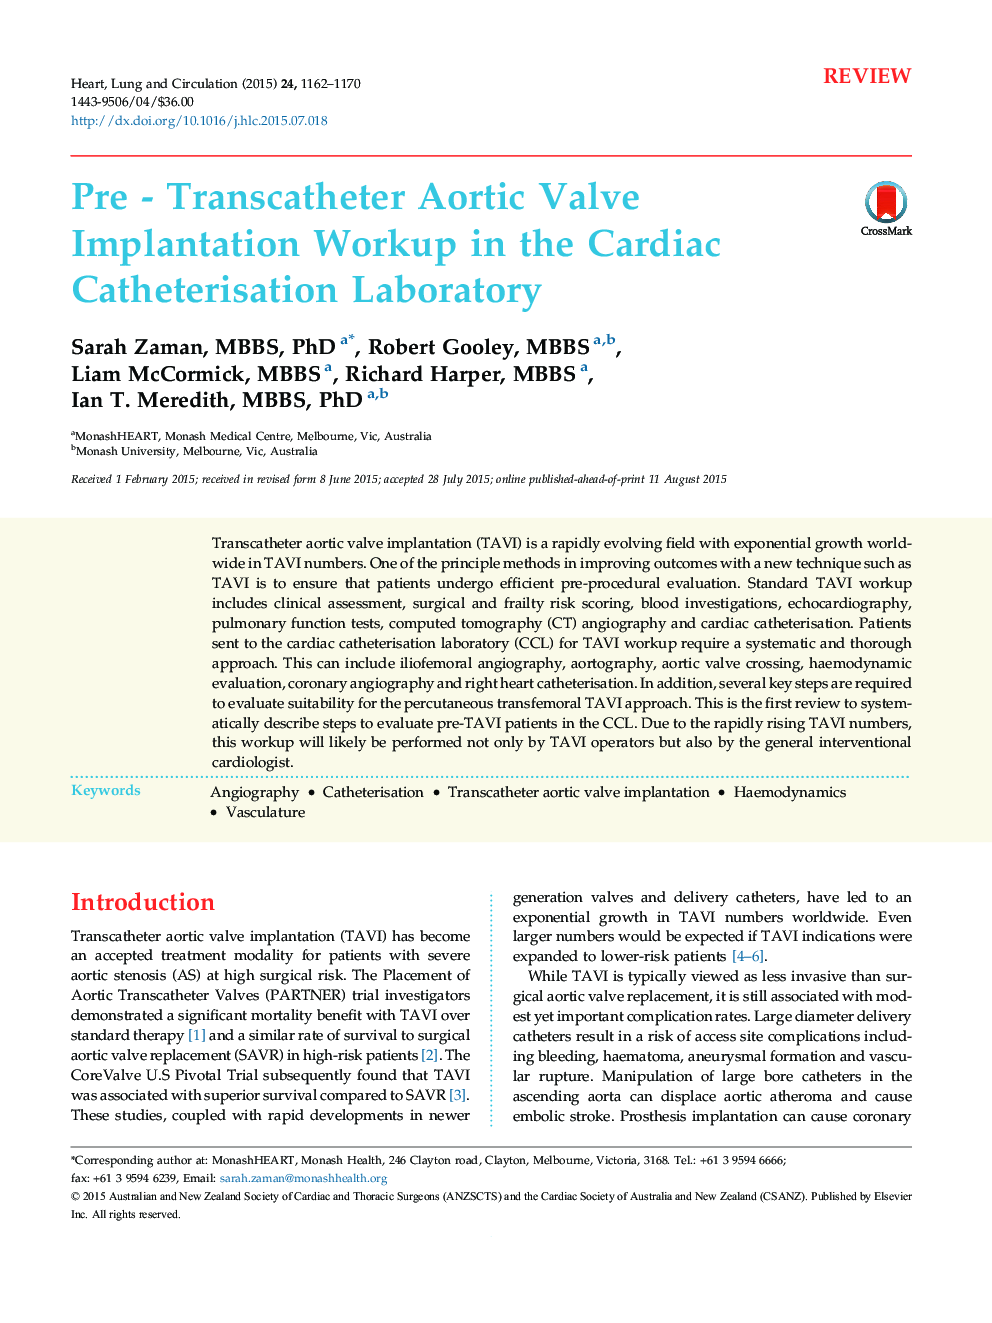 Pre - Transcatheter Aortic Valve Implantation Workup in the Cardiac Catheterisation Laboratory